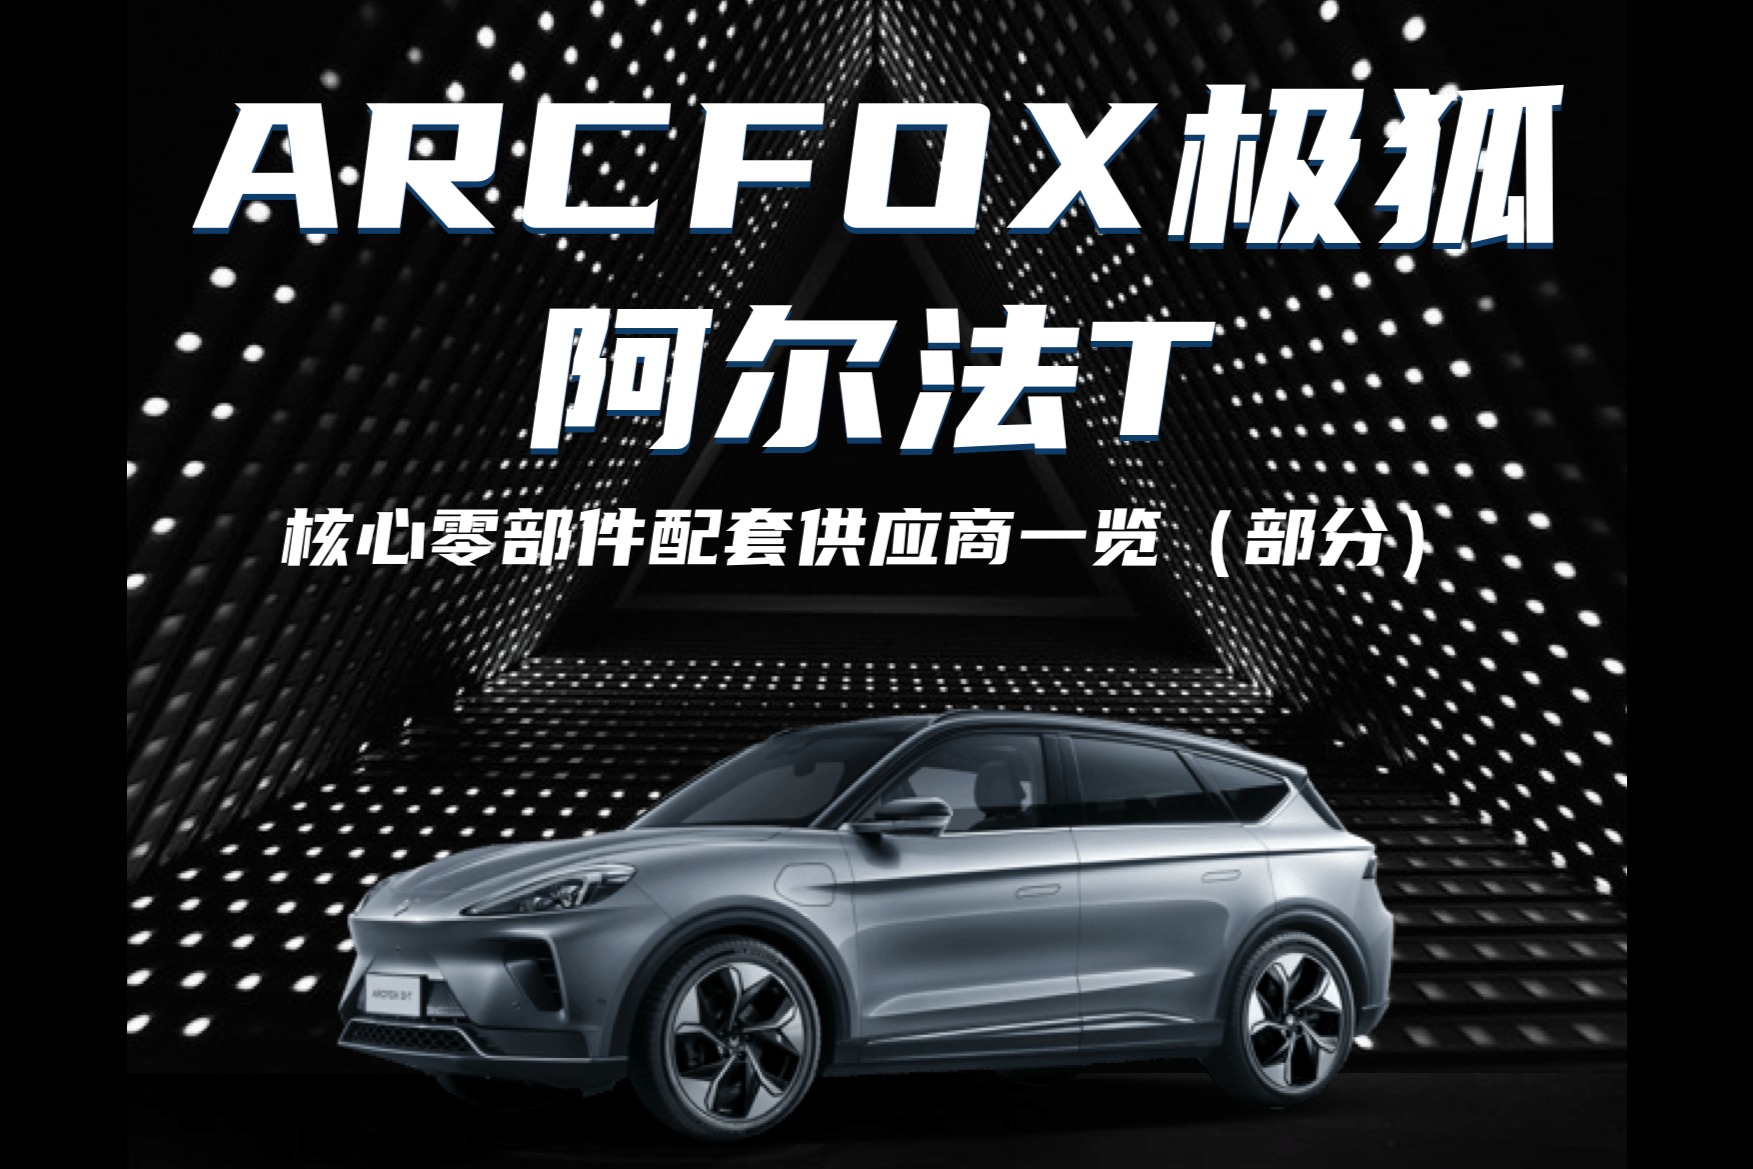 ARCFOX极狐阿尔法T核心零部件供应商大全(部分)